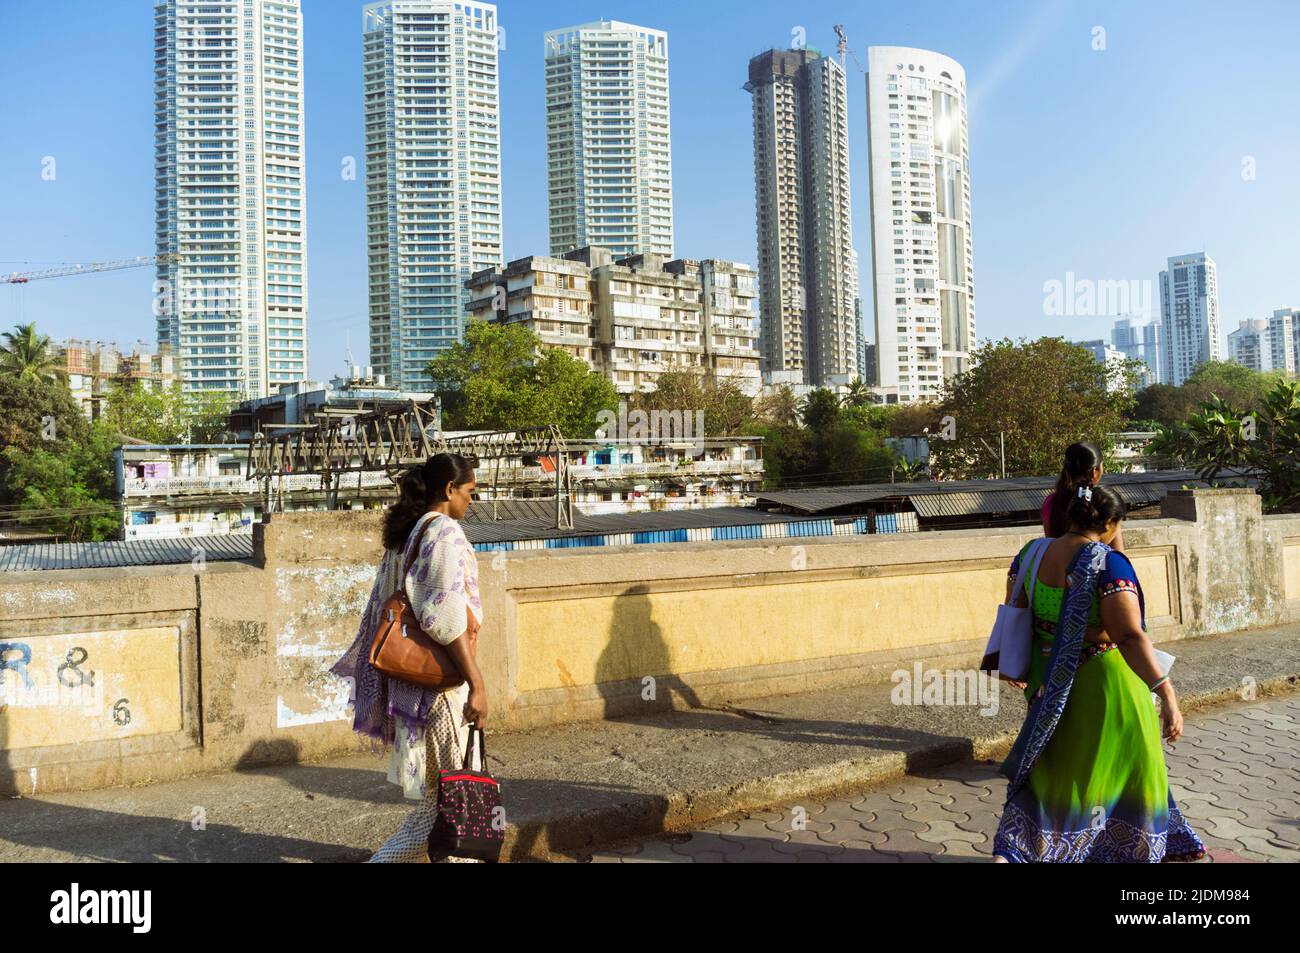 Mumbai, Maharashtra, India : Las mujeres caminan por edificios altos en el sur de Mumbai. Foto de stock